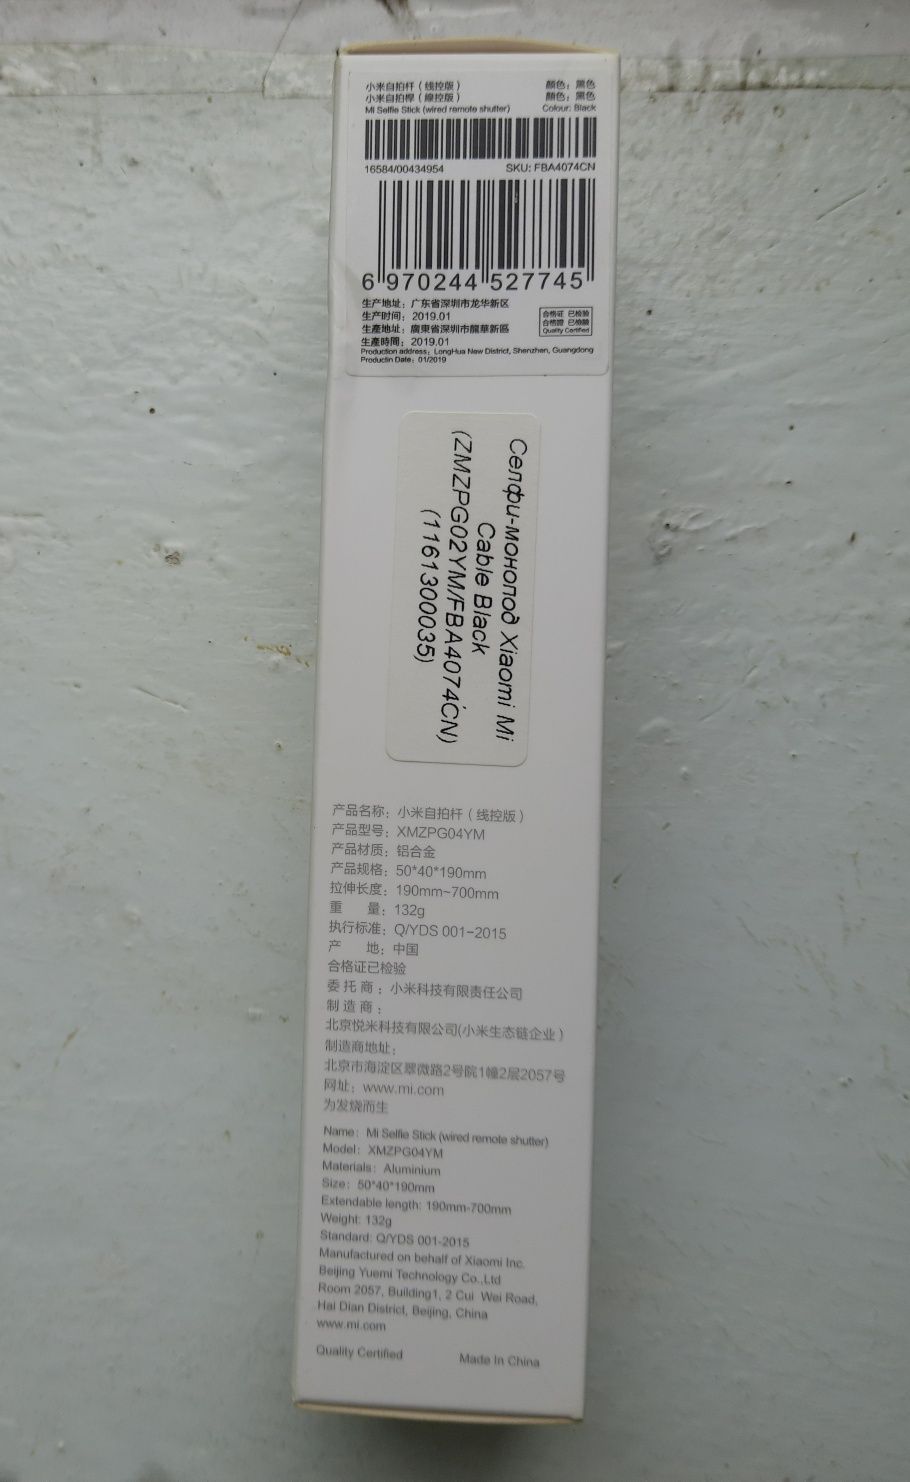 Селфи-монопод Xiaomi Mi Selfie Stick Cable Black (FBA4074CN).